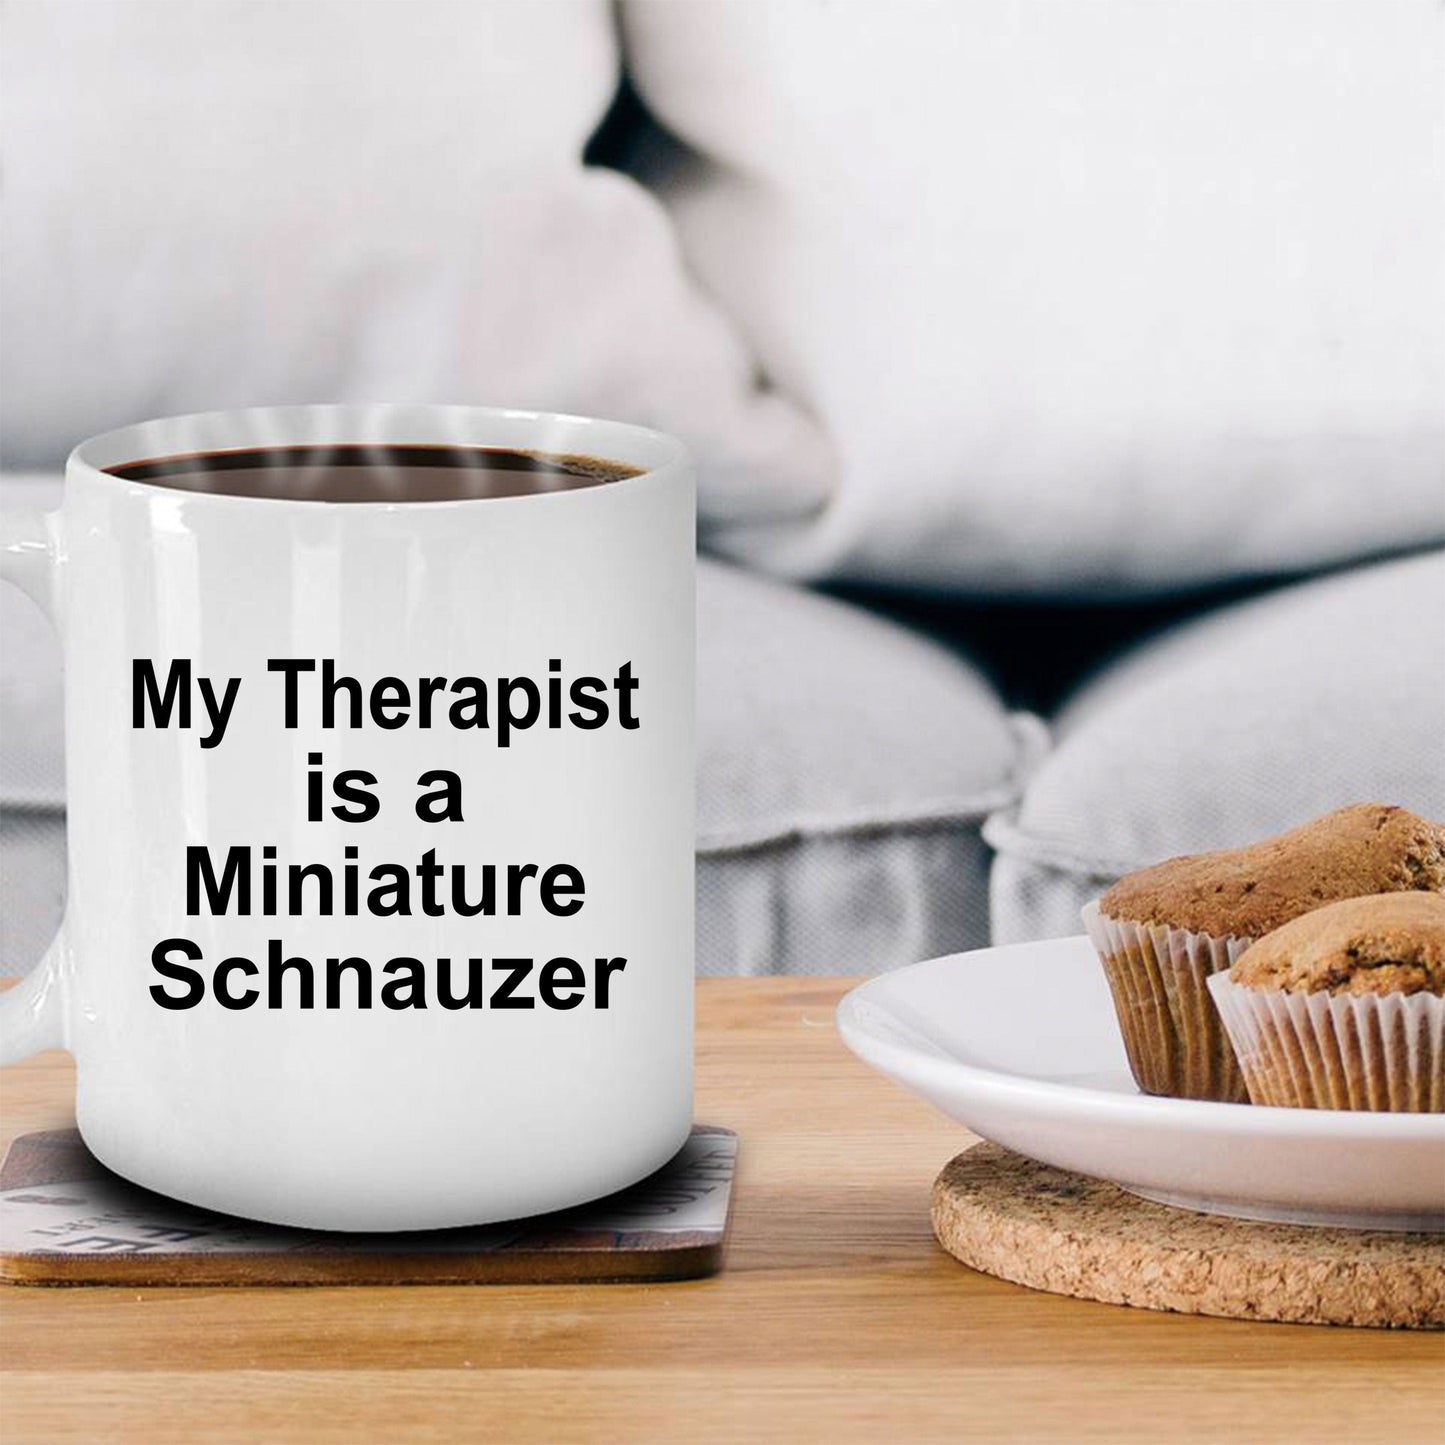 Miniature Schnauzer Dog Owner Lover Funny Gift Therapist White Ceramic Coffee Mug